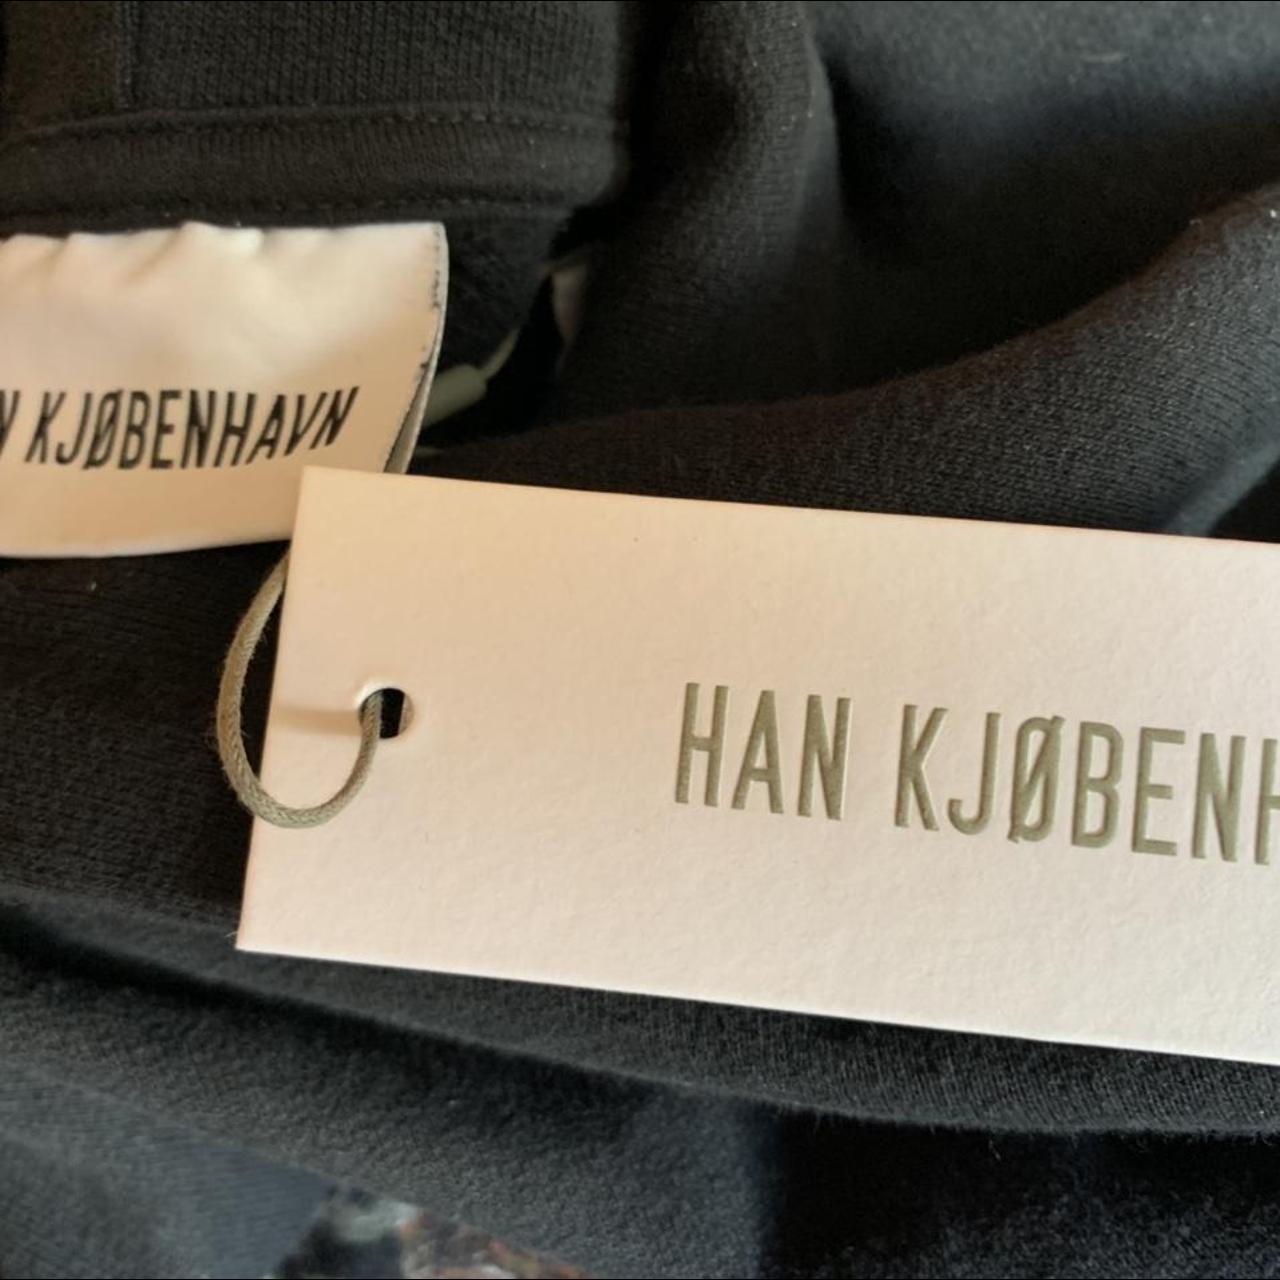 Product Image 3 - Han Kjobenhavn flower graphic hoodie

Brand